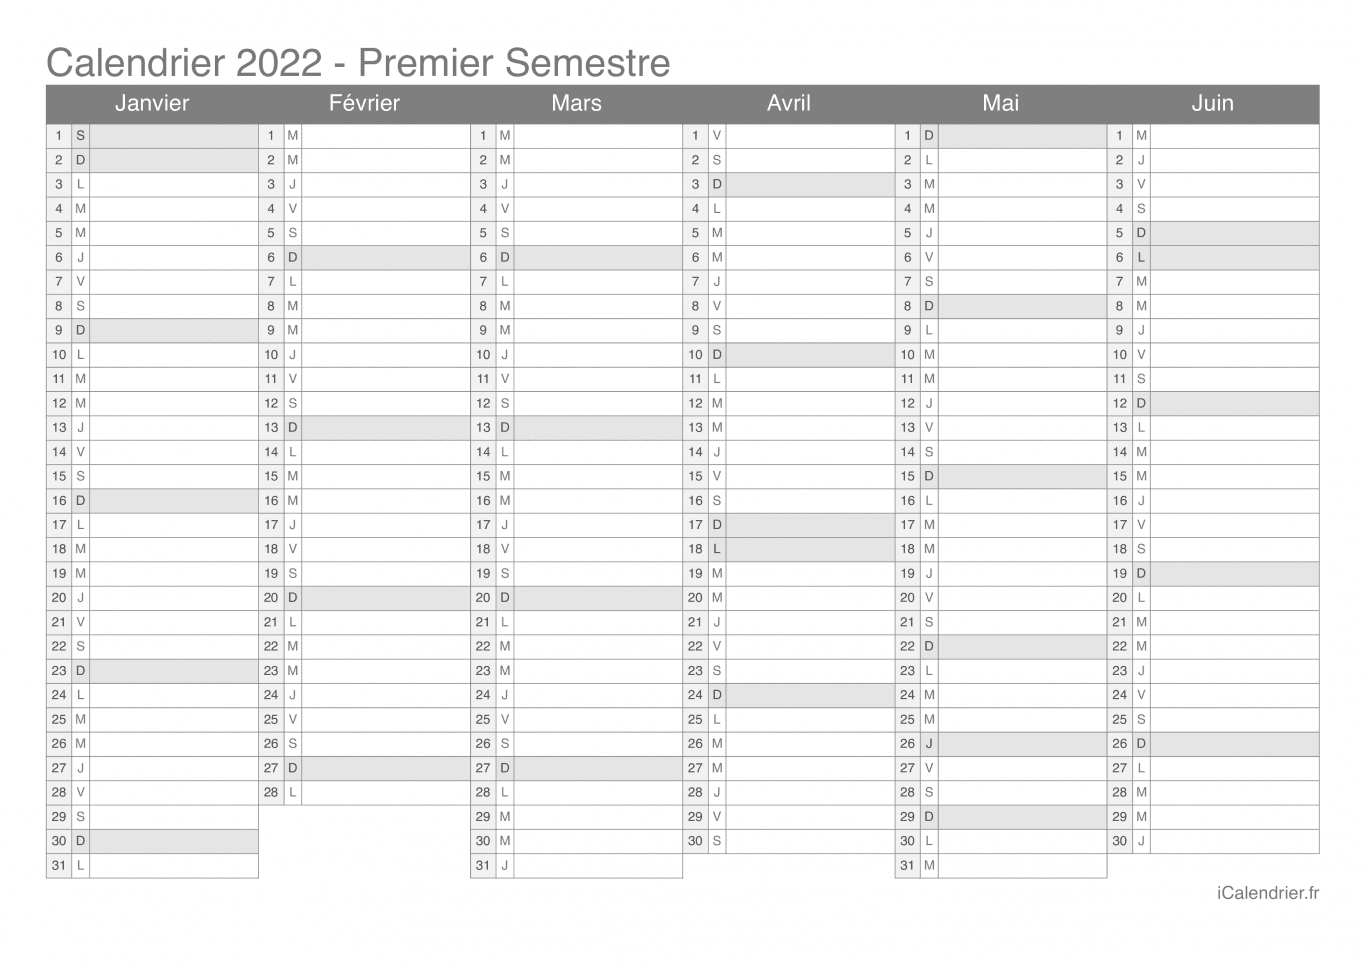 Calendrier par semestre 2022